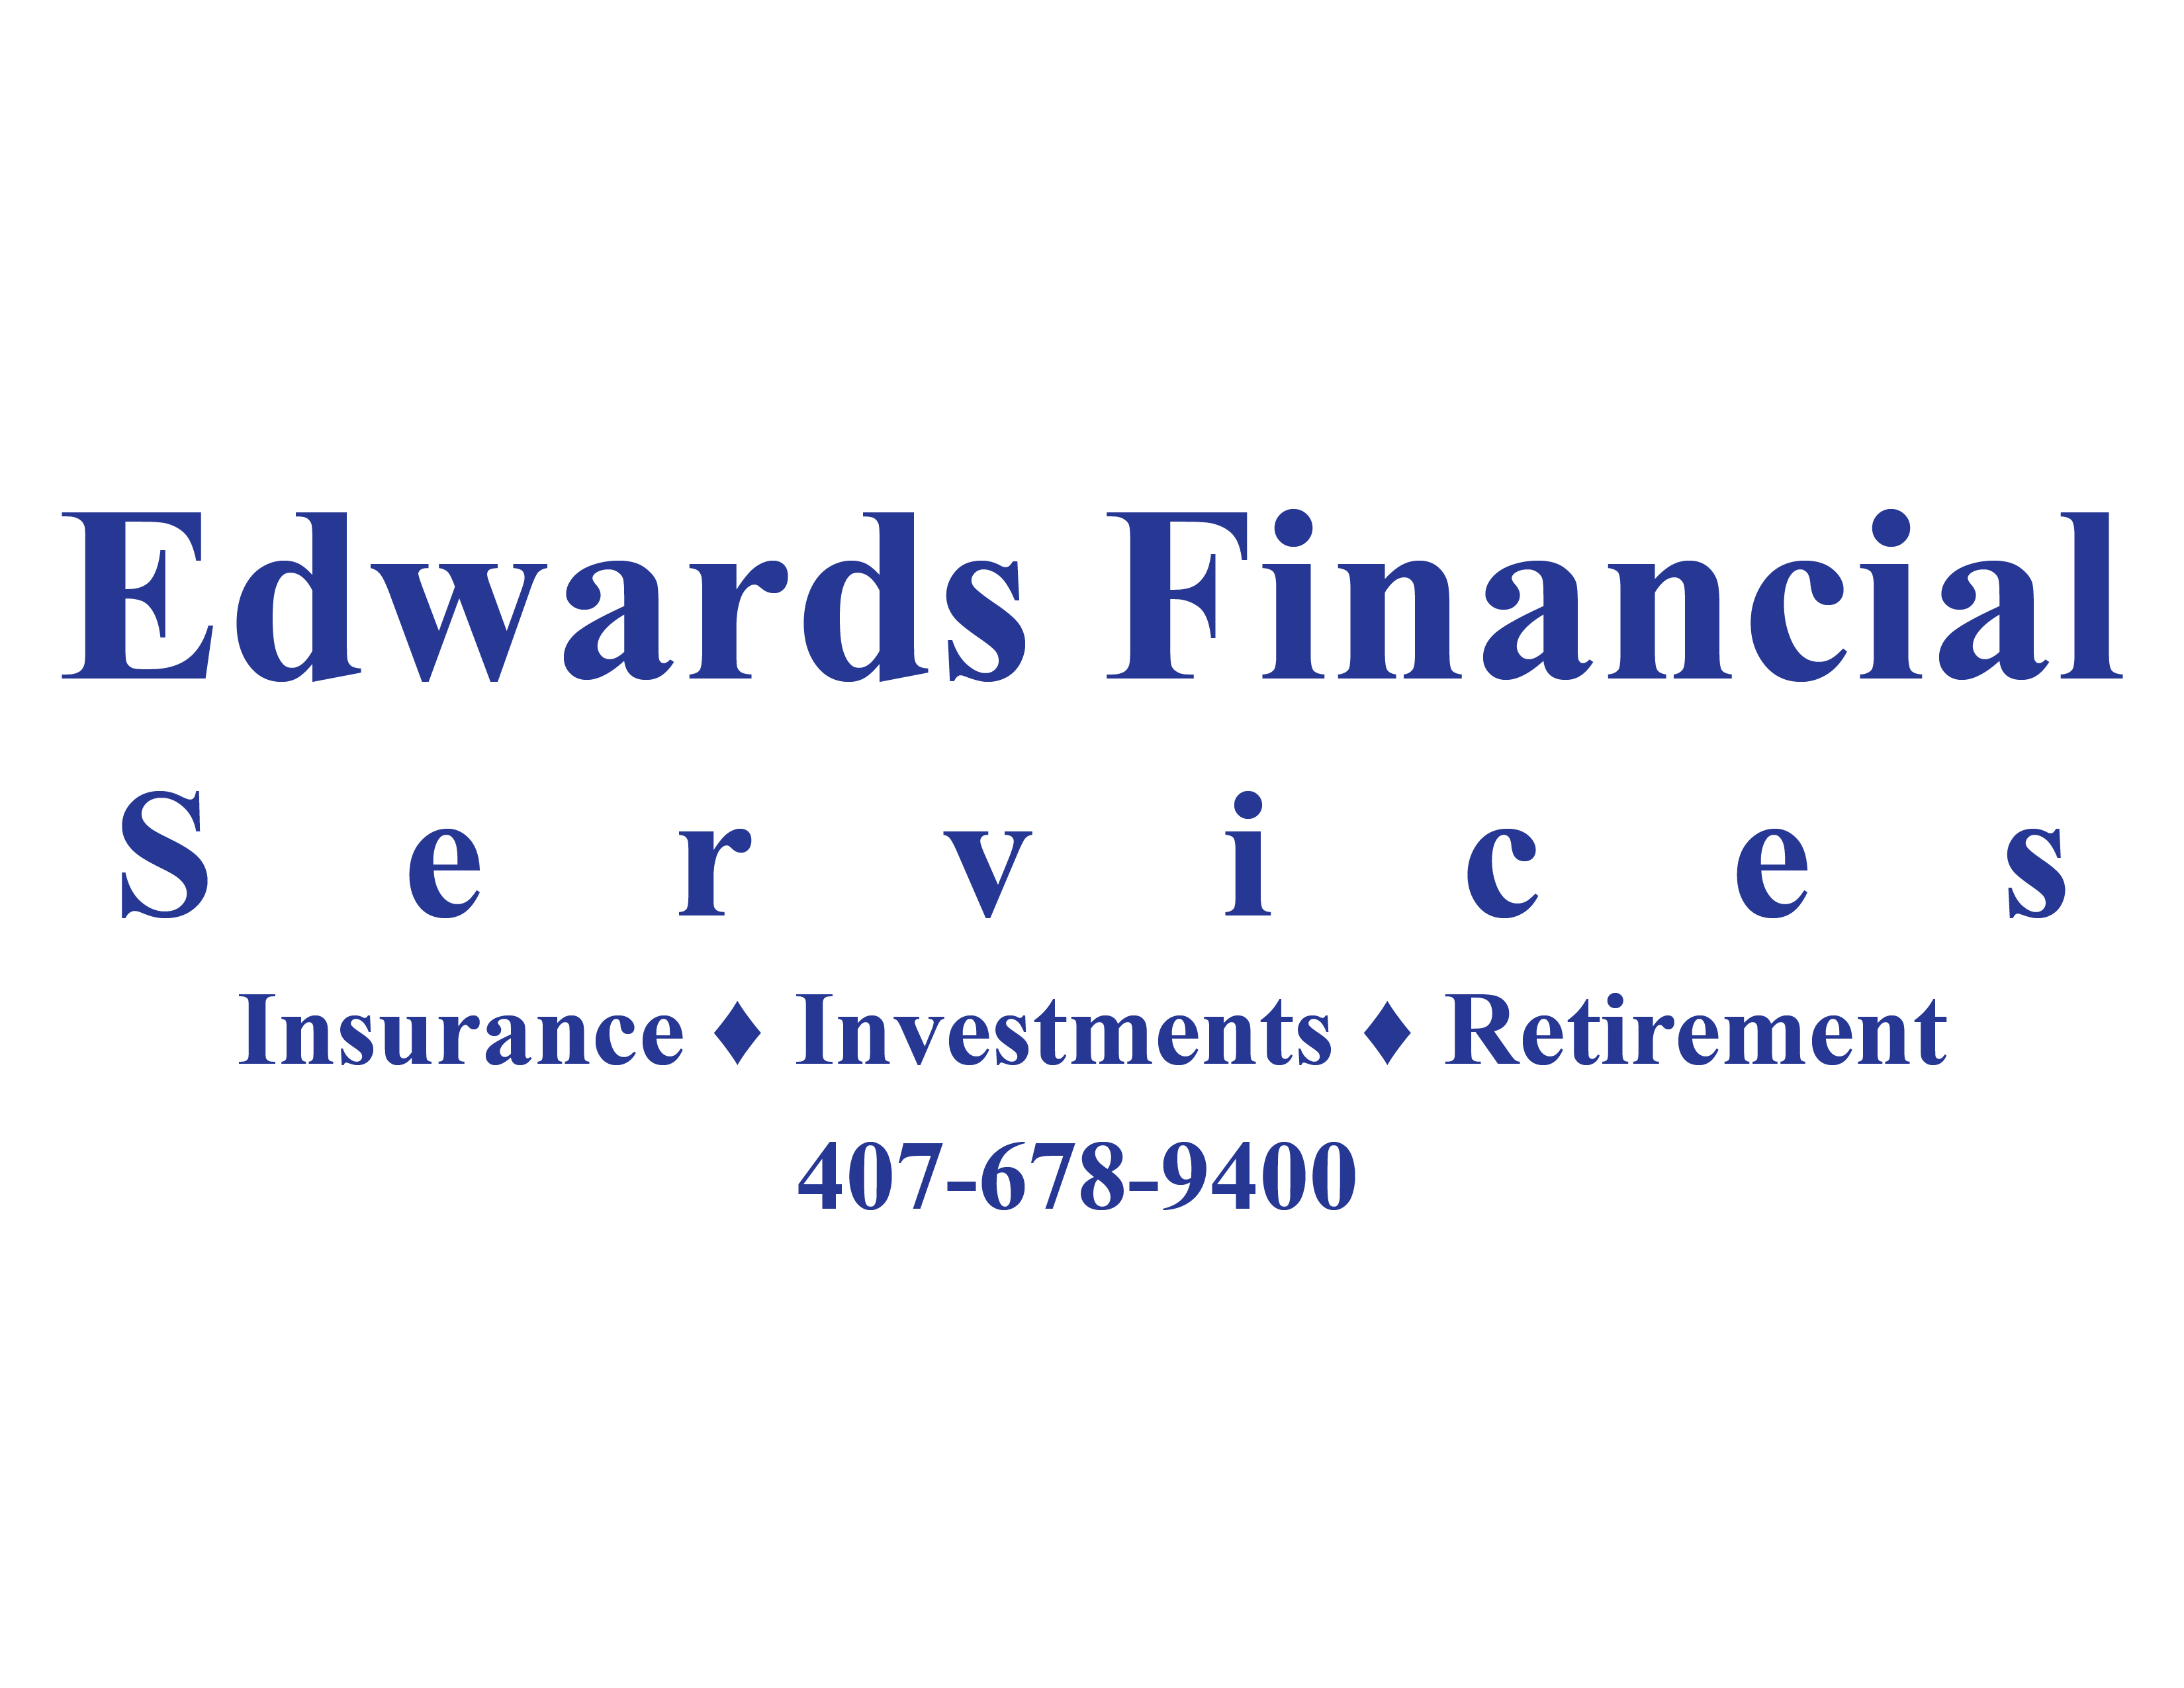 edwards financial phone number transparent